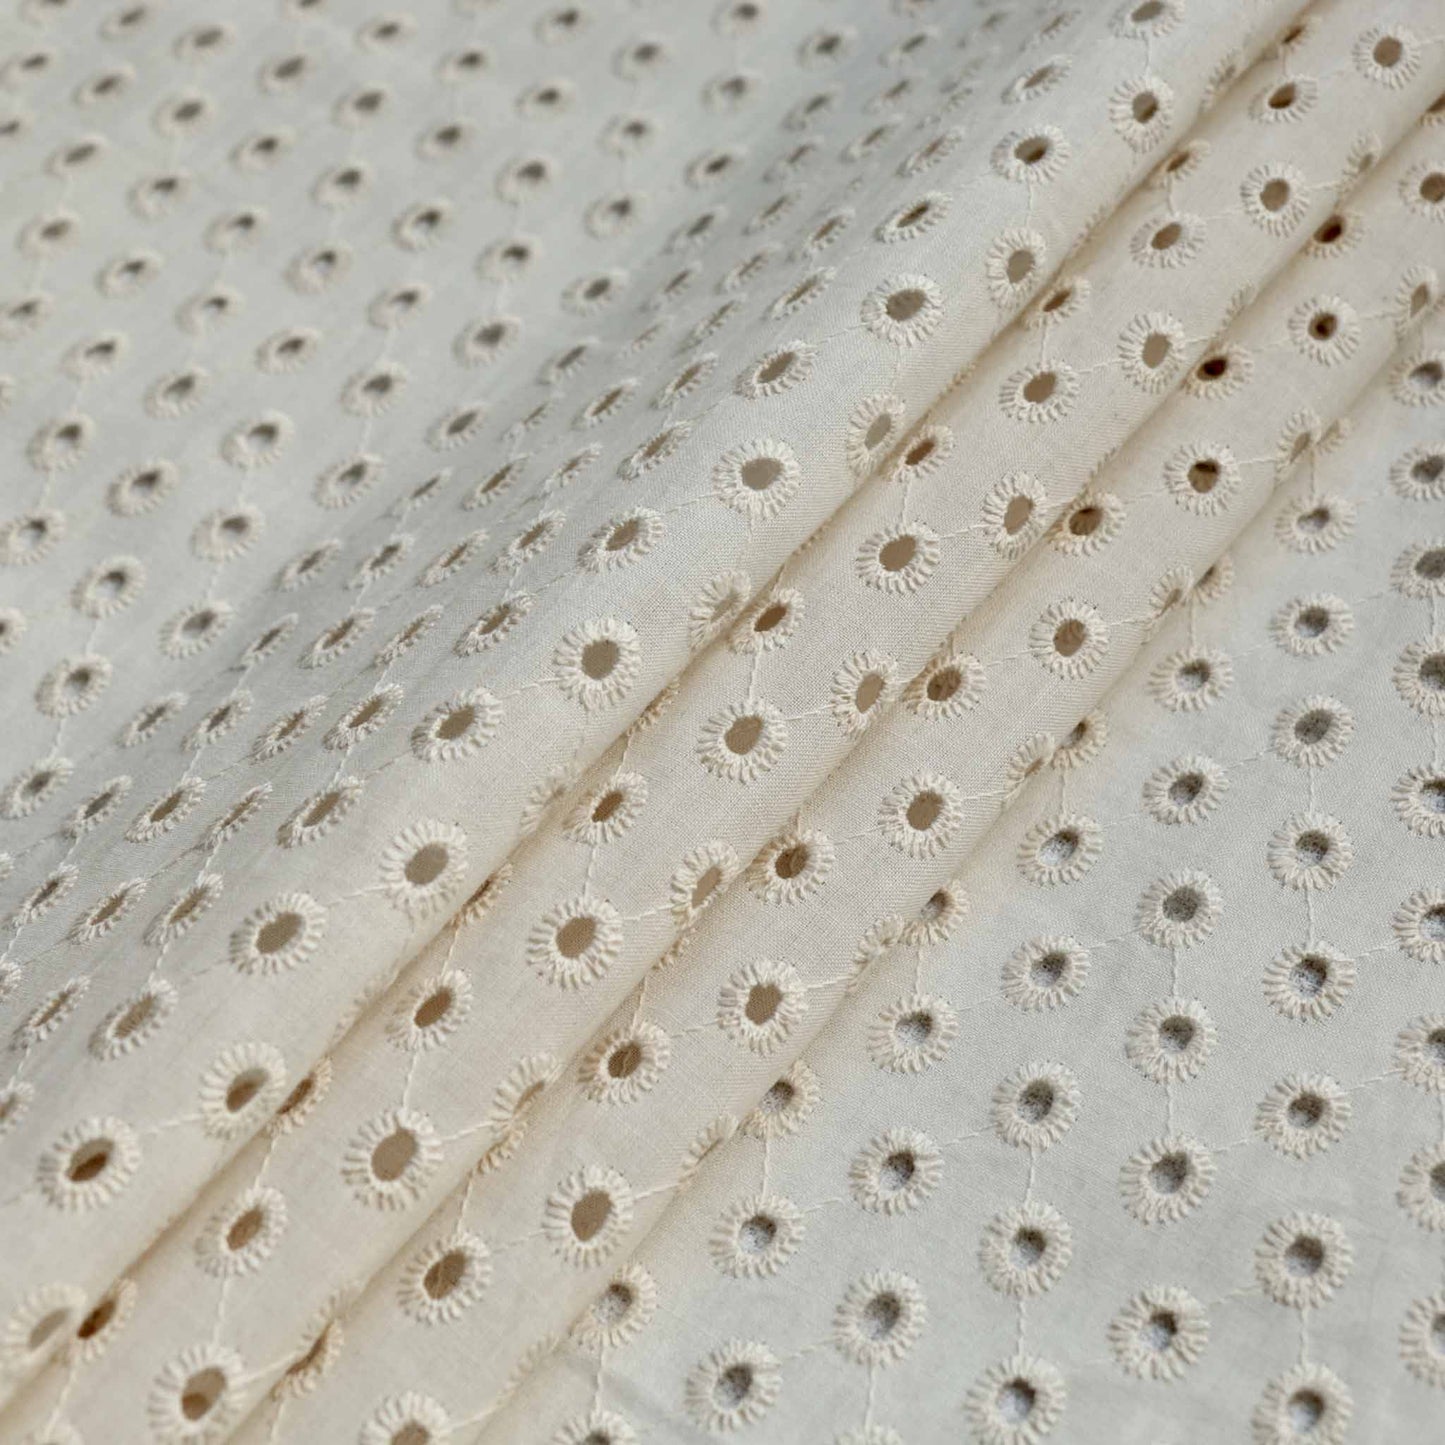 folded ivory broad anglaise dressmaking fabric with single hole embroidery design